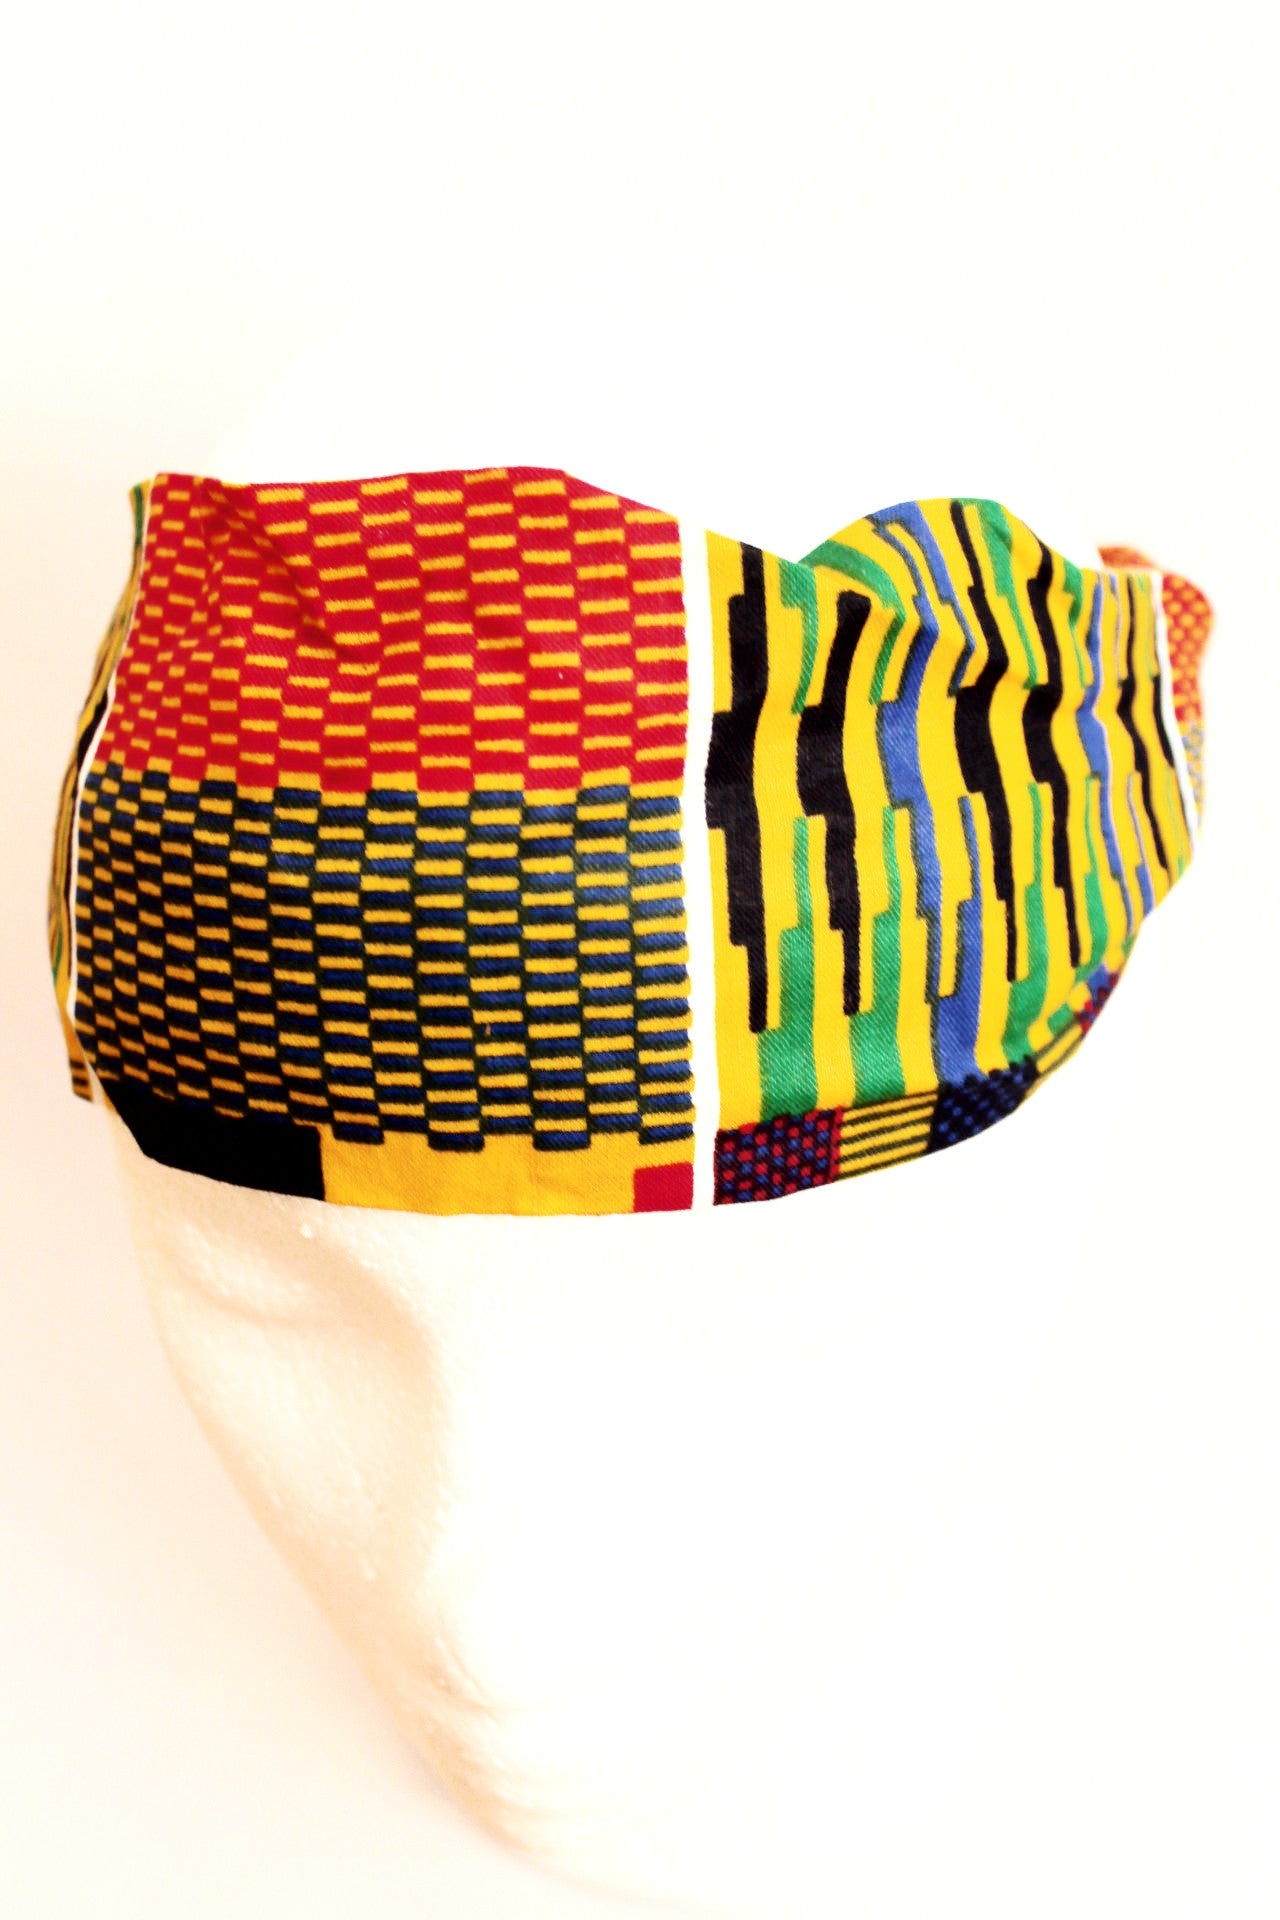 African print headbands